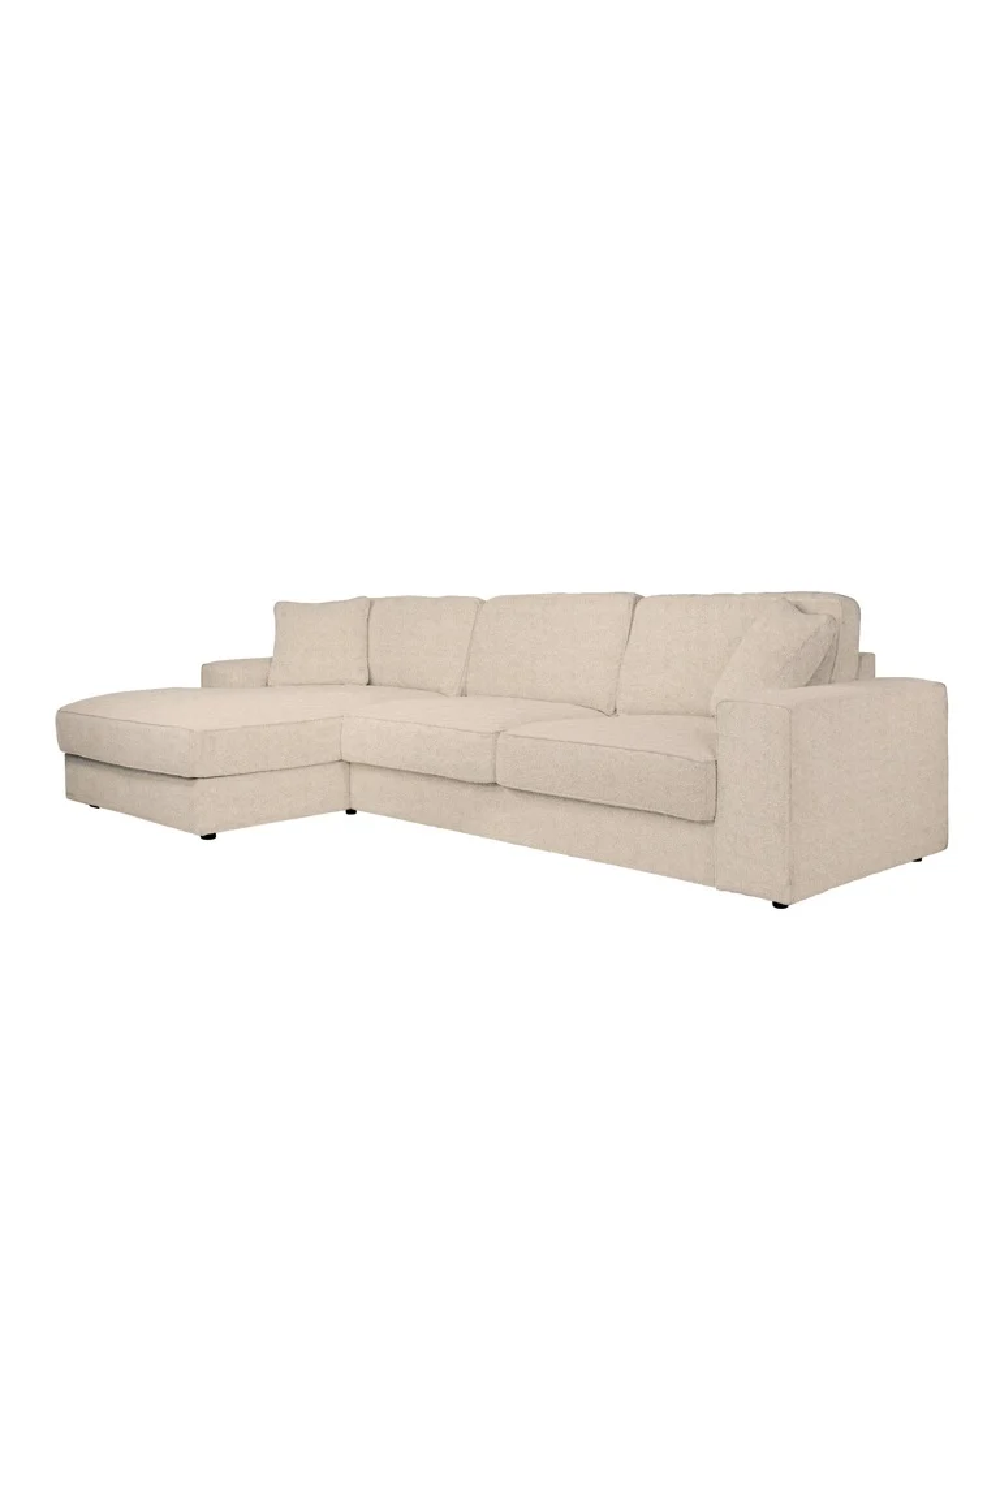 Beige Minimalist Sofa Set | OROA Santos | Oroa.com